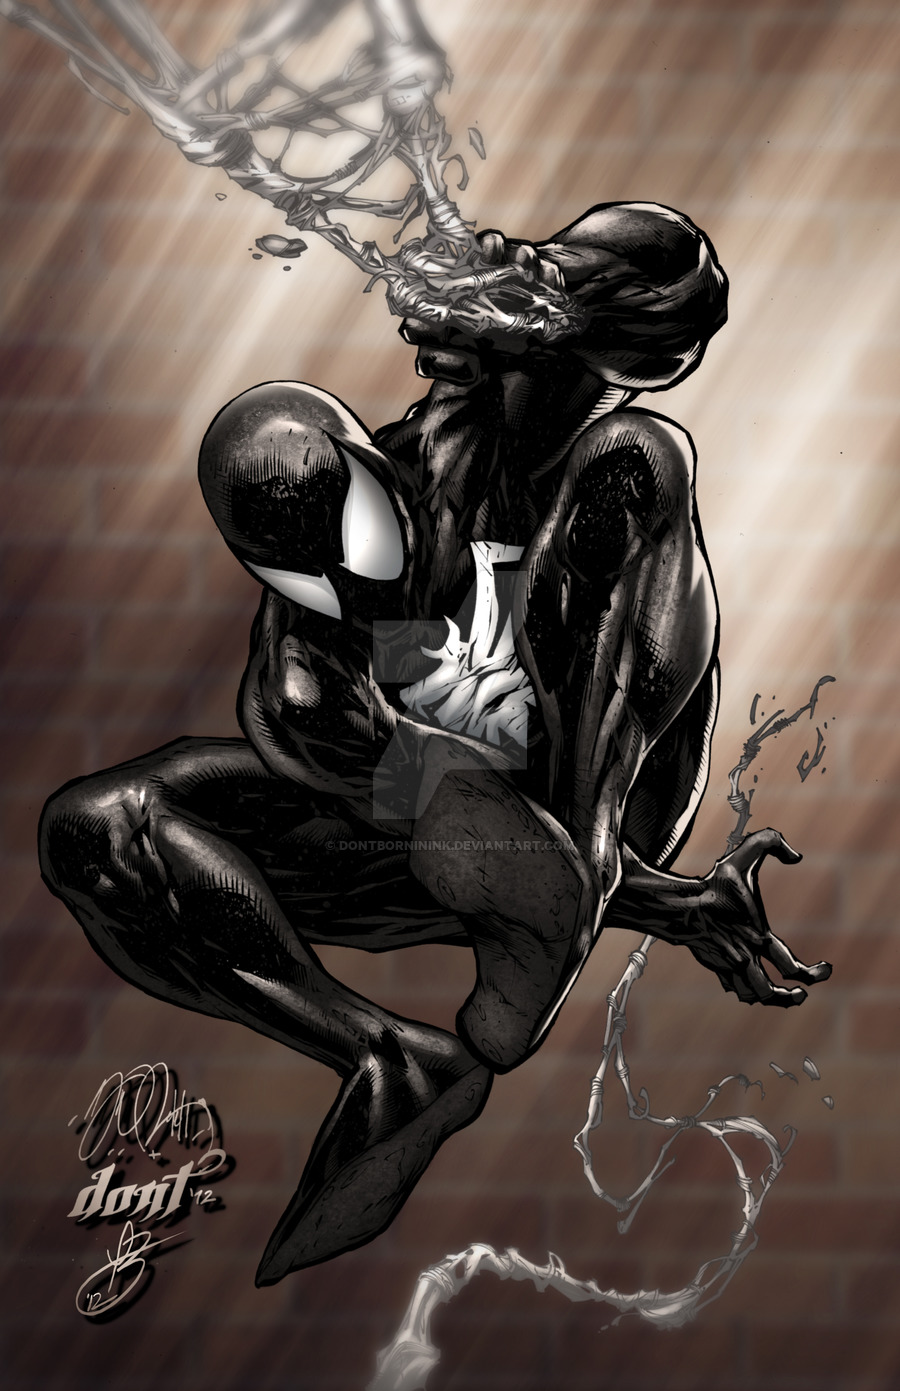 Spiderman Black Suit by DontBornInInk on DeviantArt